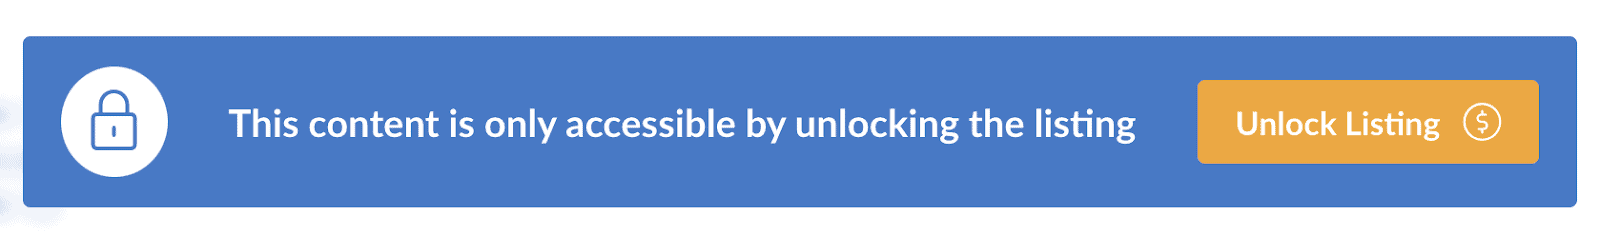 unlock listing